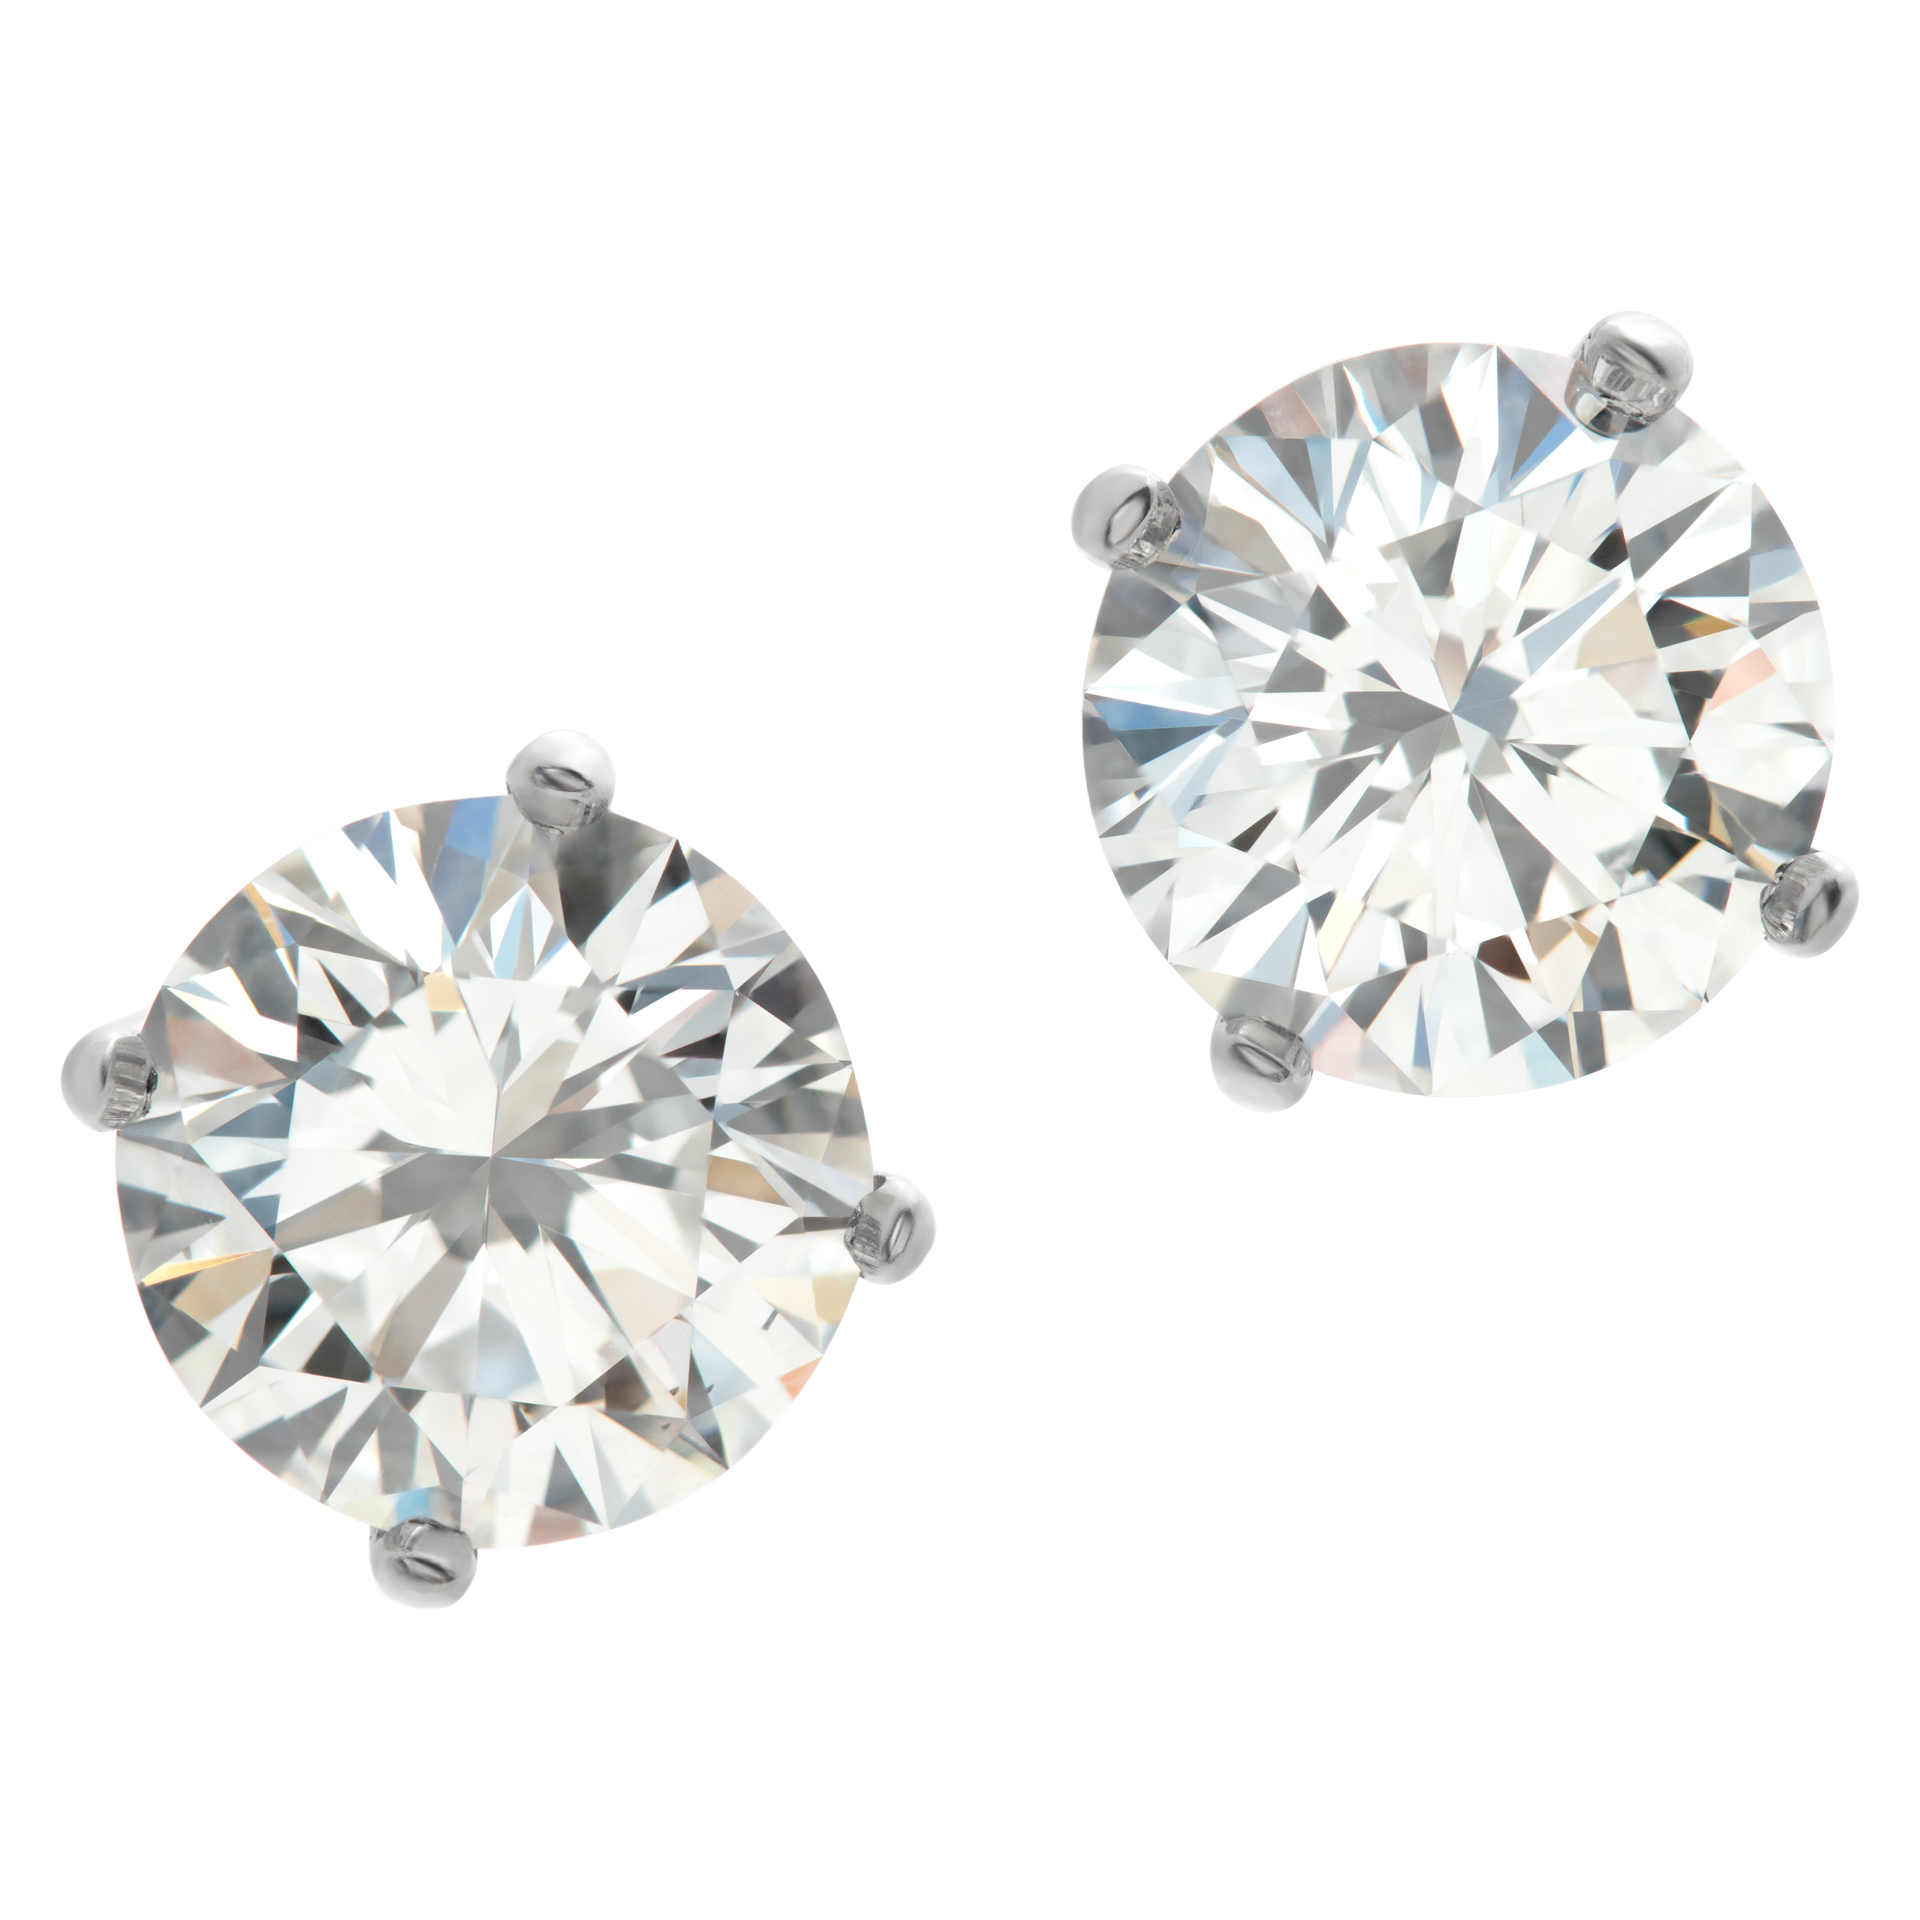 Tiffany & Co. platinum diamond studs earrings with round brilliant cut diamonds 1.66 carat (F color, VVS1 clarity) & 1.63 carat (F color, VVS1 clarity)